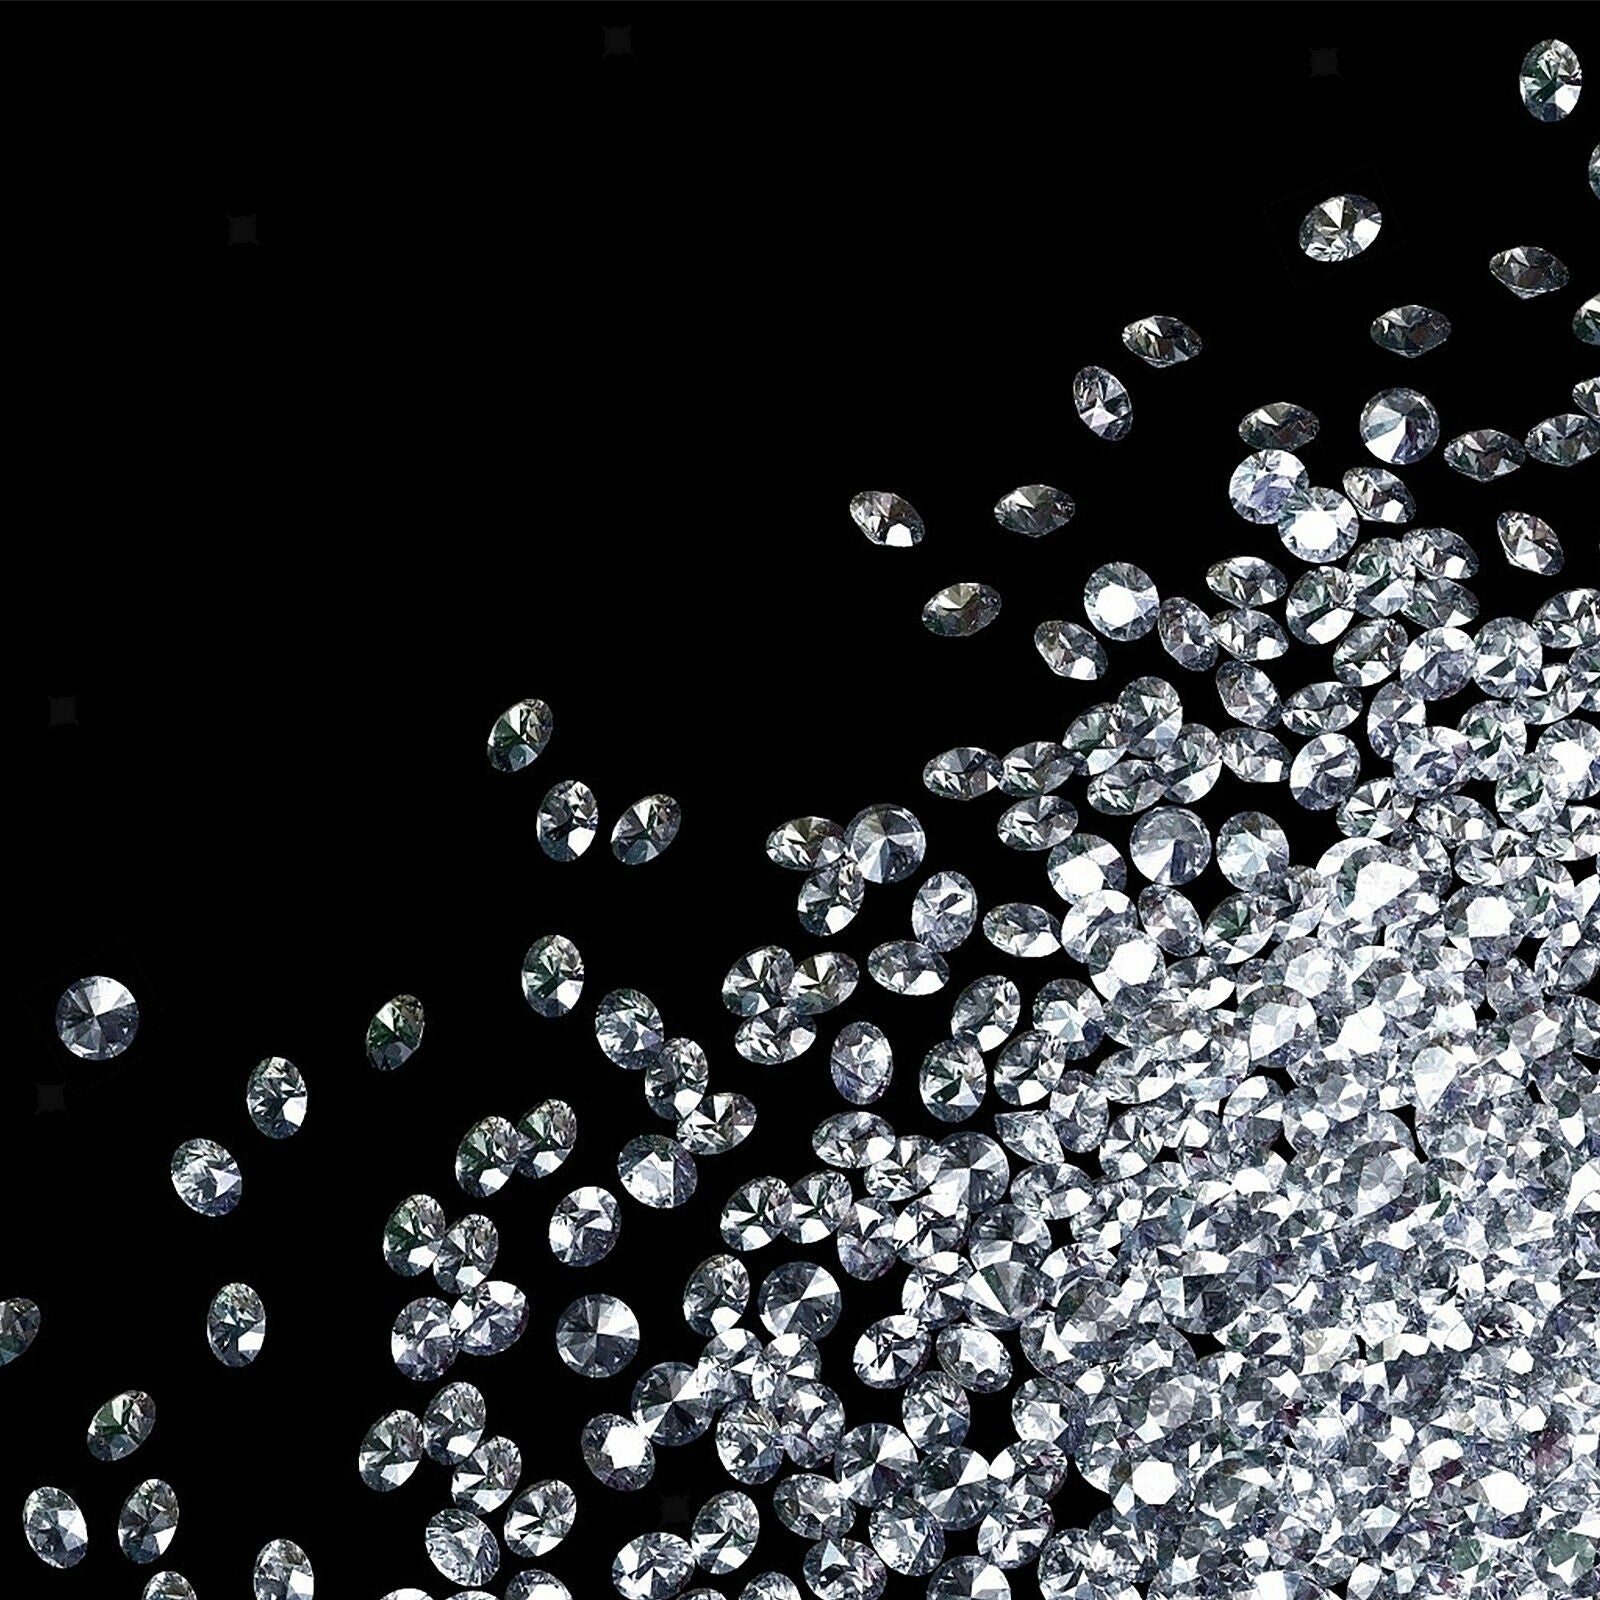 5000x diamond crystals for vase fillers, wedding, DIY